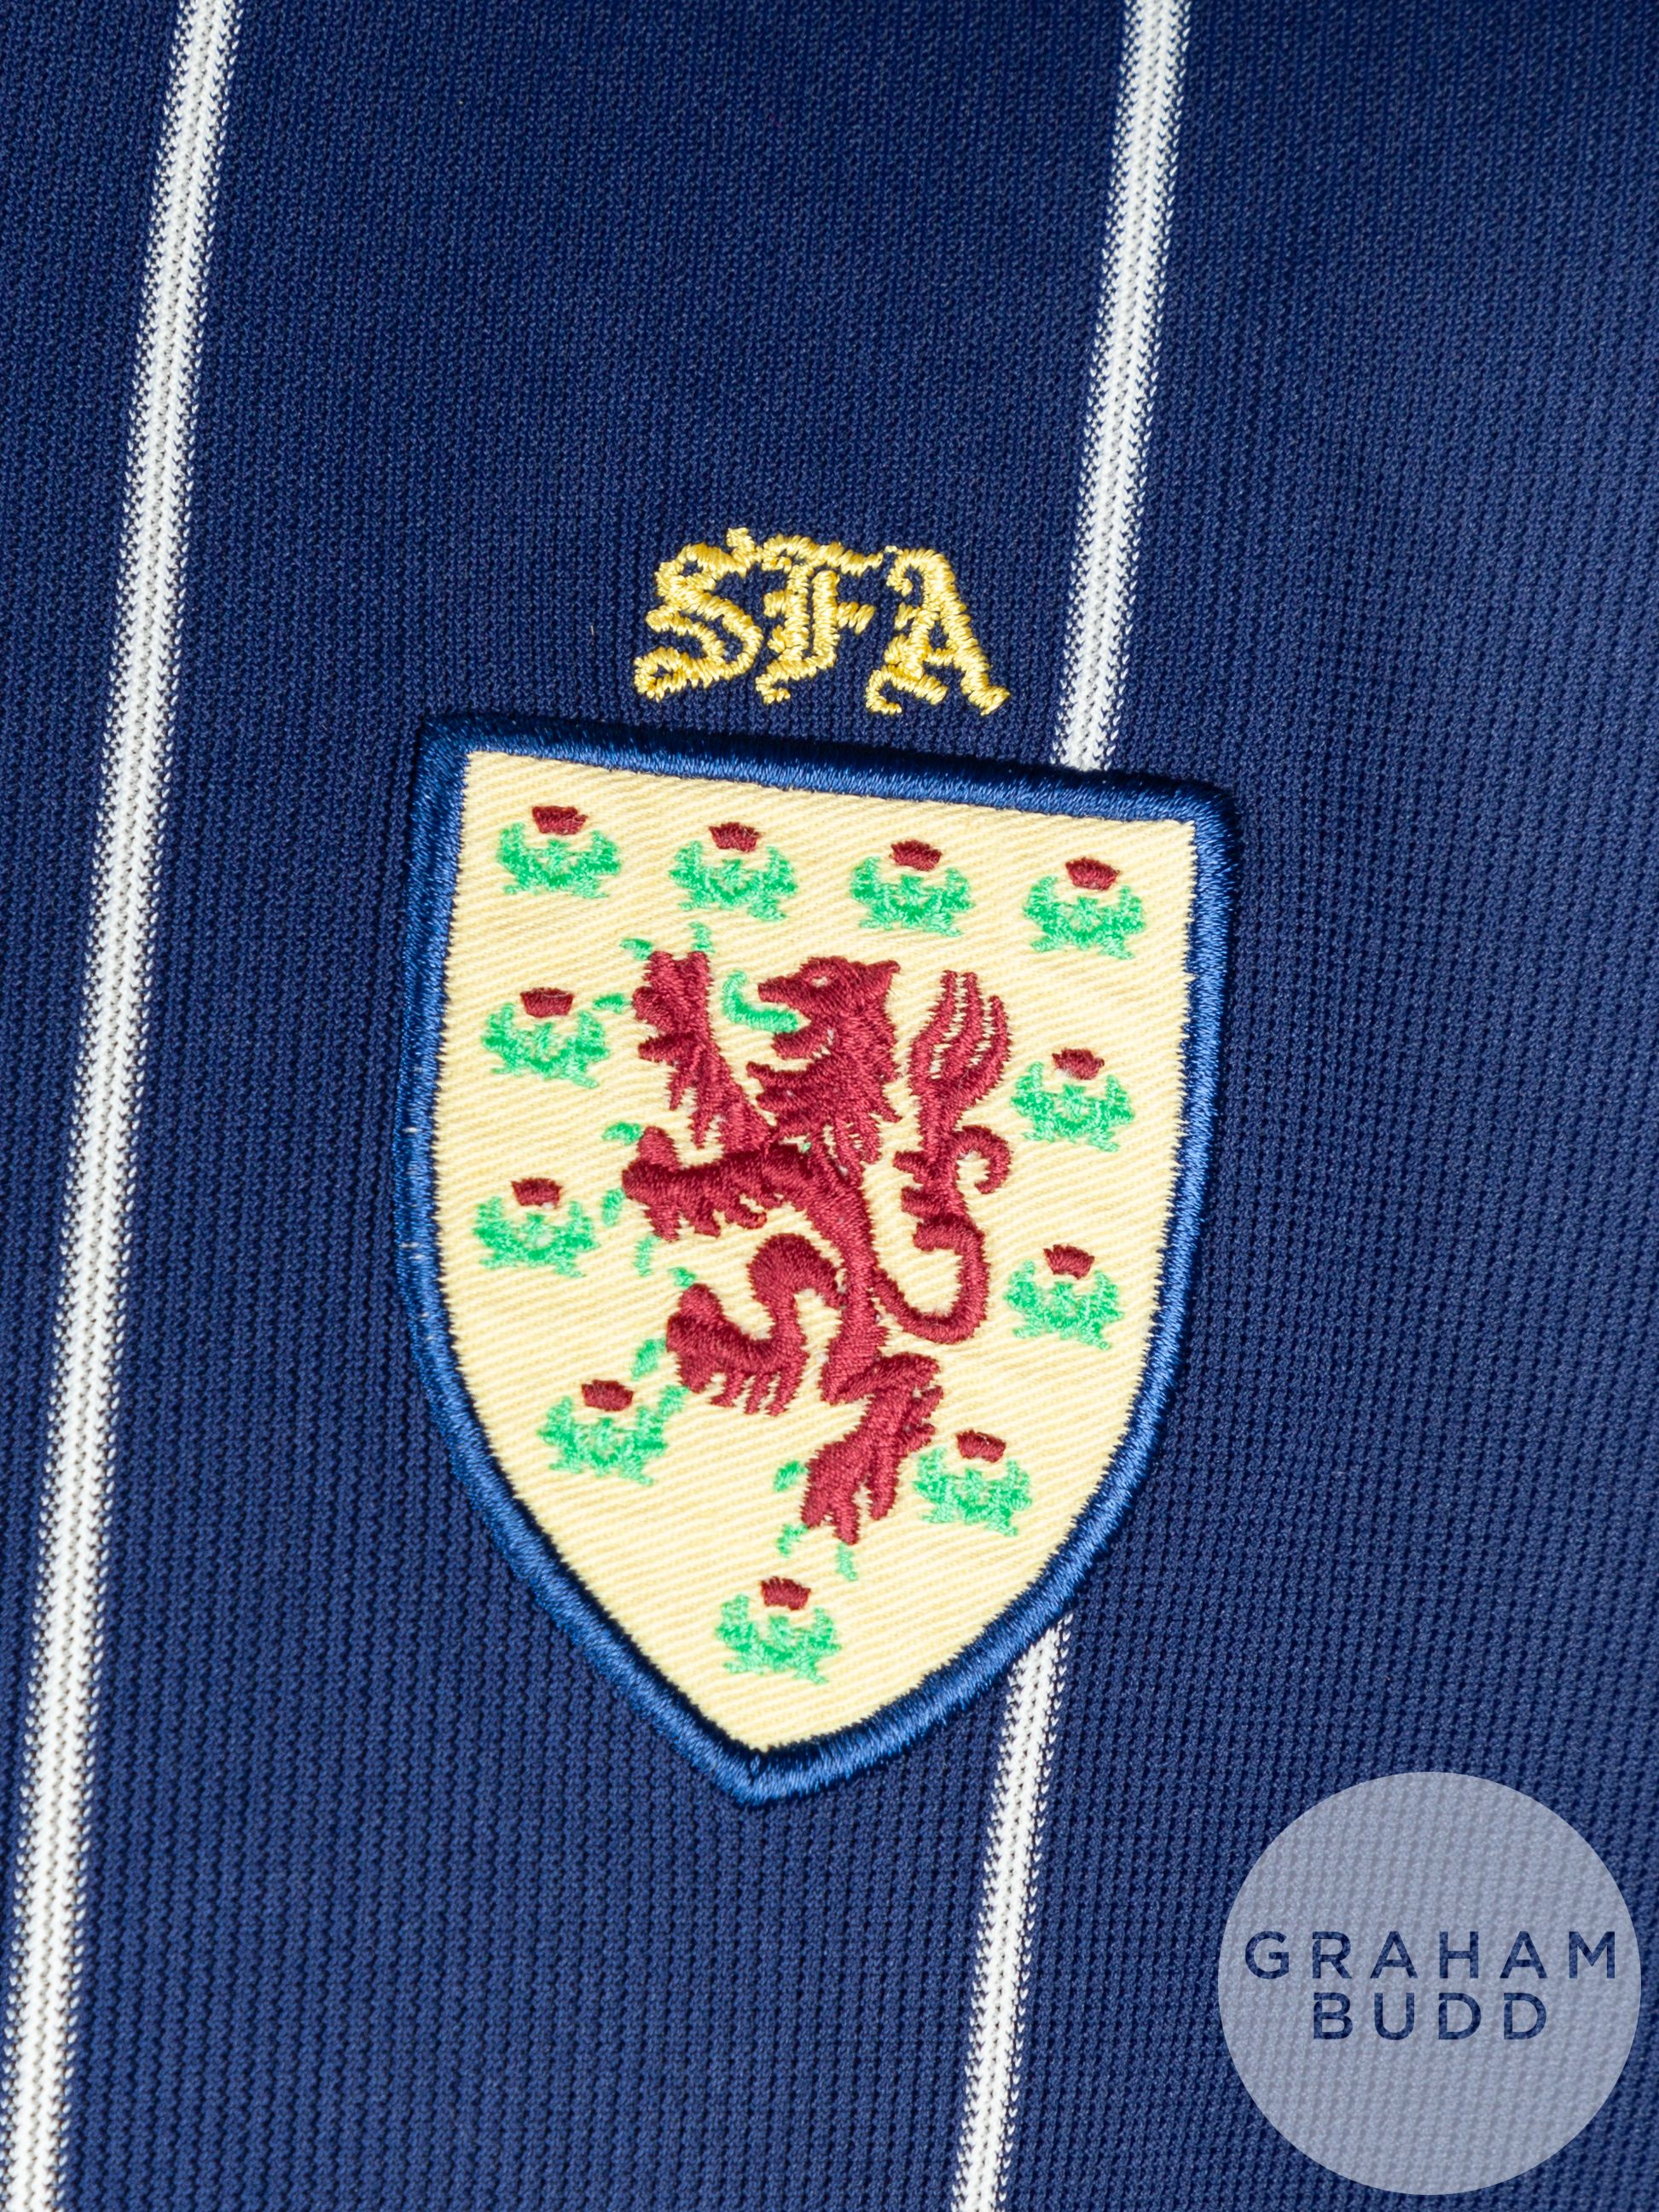 Steven Thompson blue and white No.14 Scotland short-sleeved shirt, 2002 - Image 3 of 5